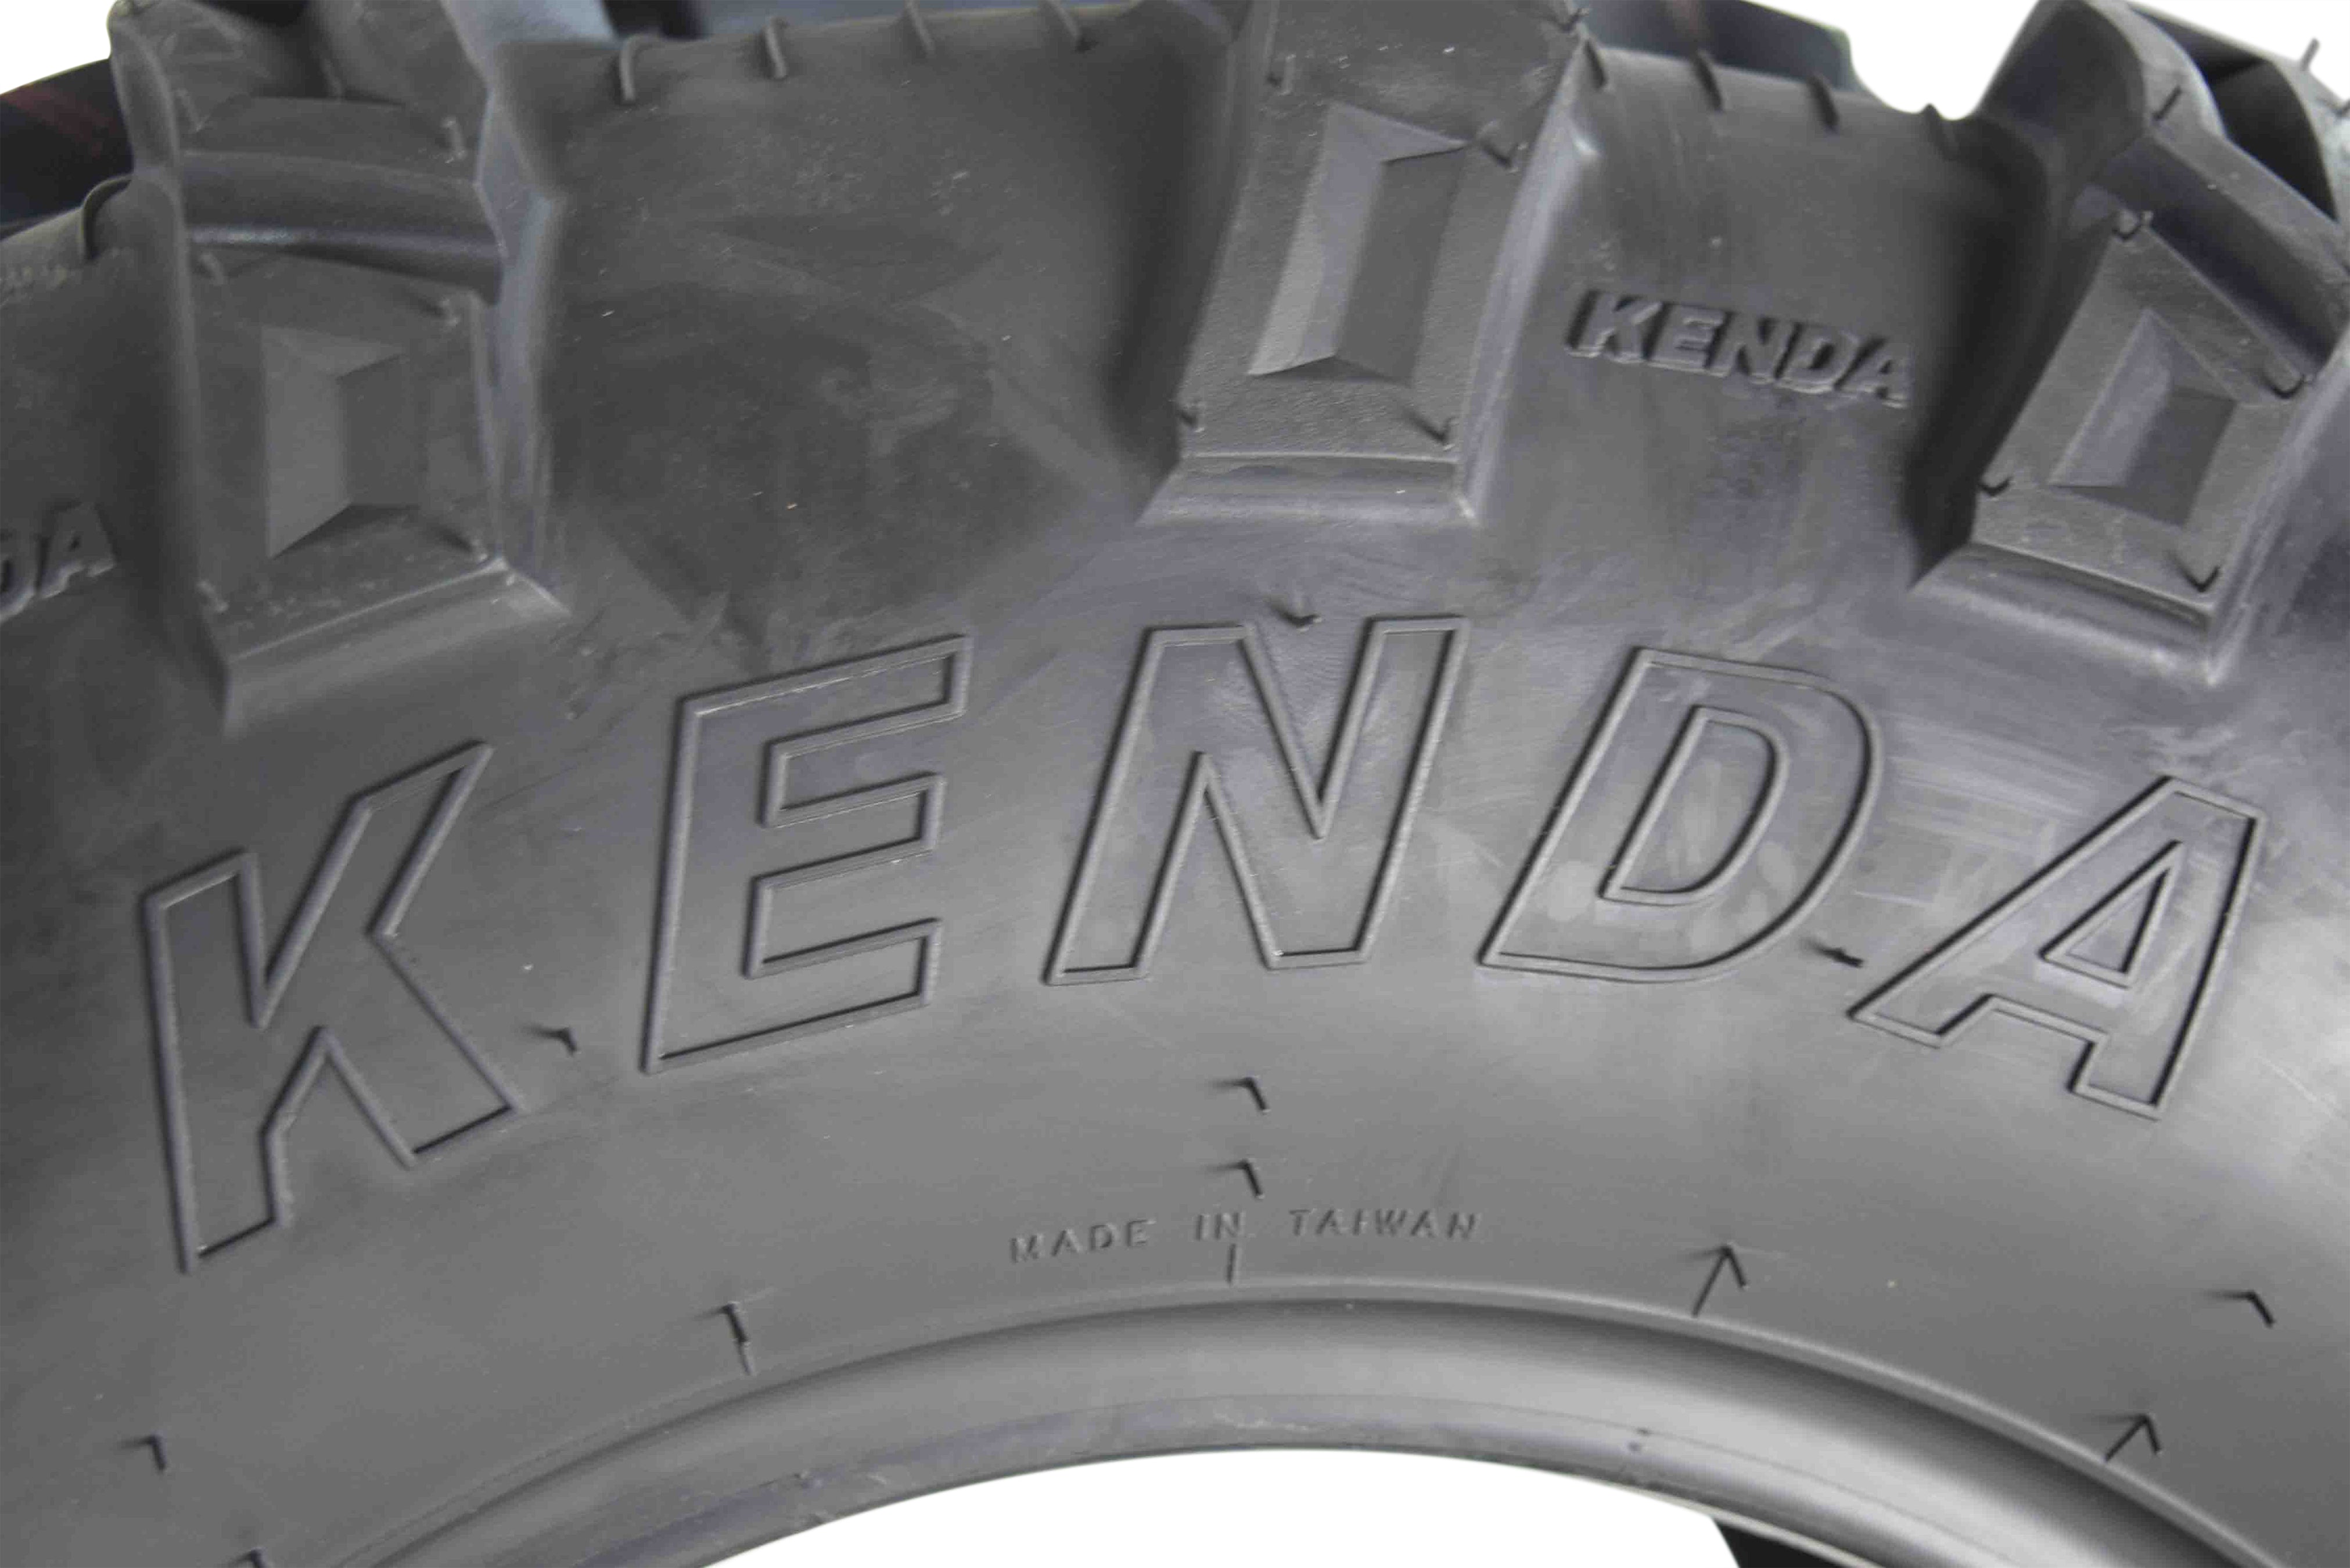 Kenda Bear Claw EVO 26x11-12 Rear ATV/UTV Tire with Bottle Opener Keychain